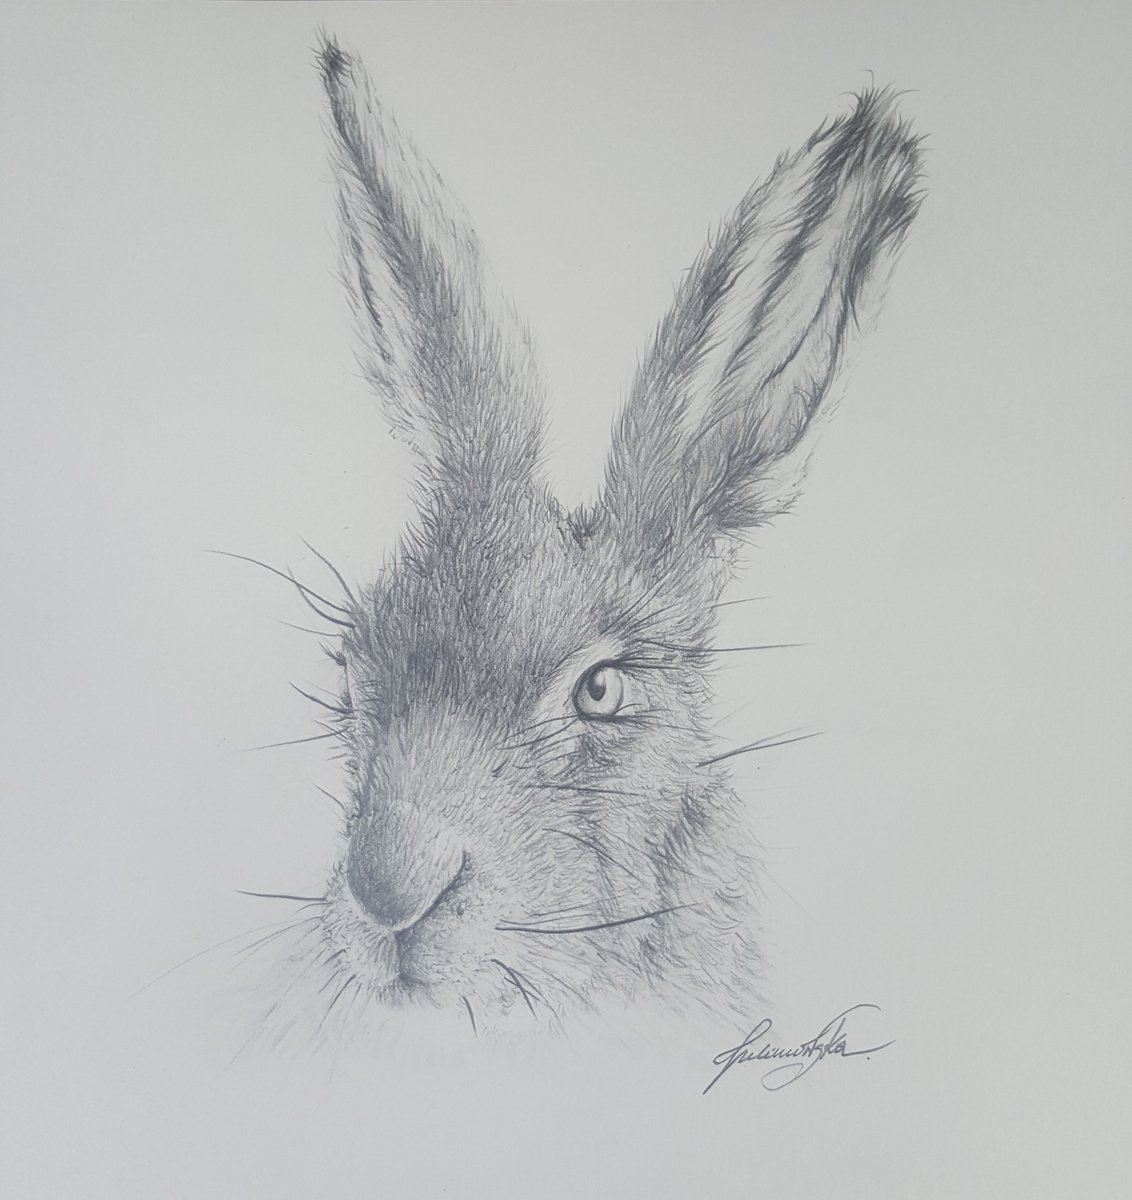 Hare #3 by Maja Tulimowska - Chmielewska